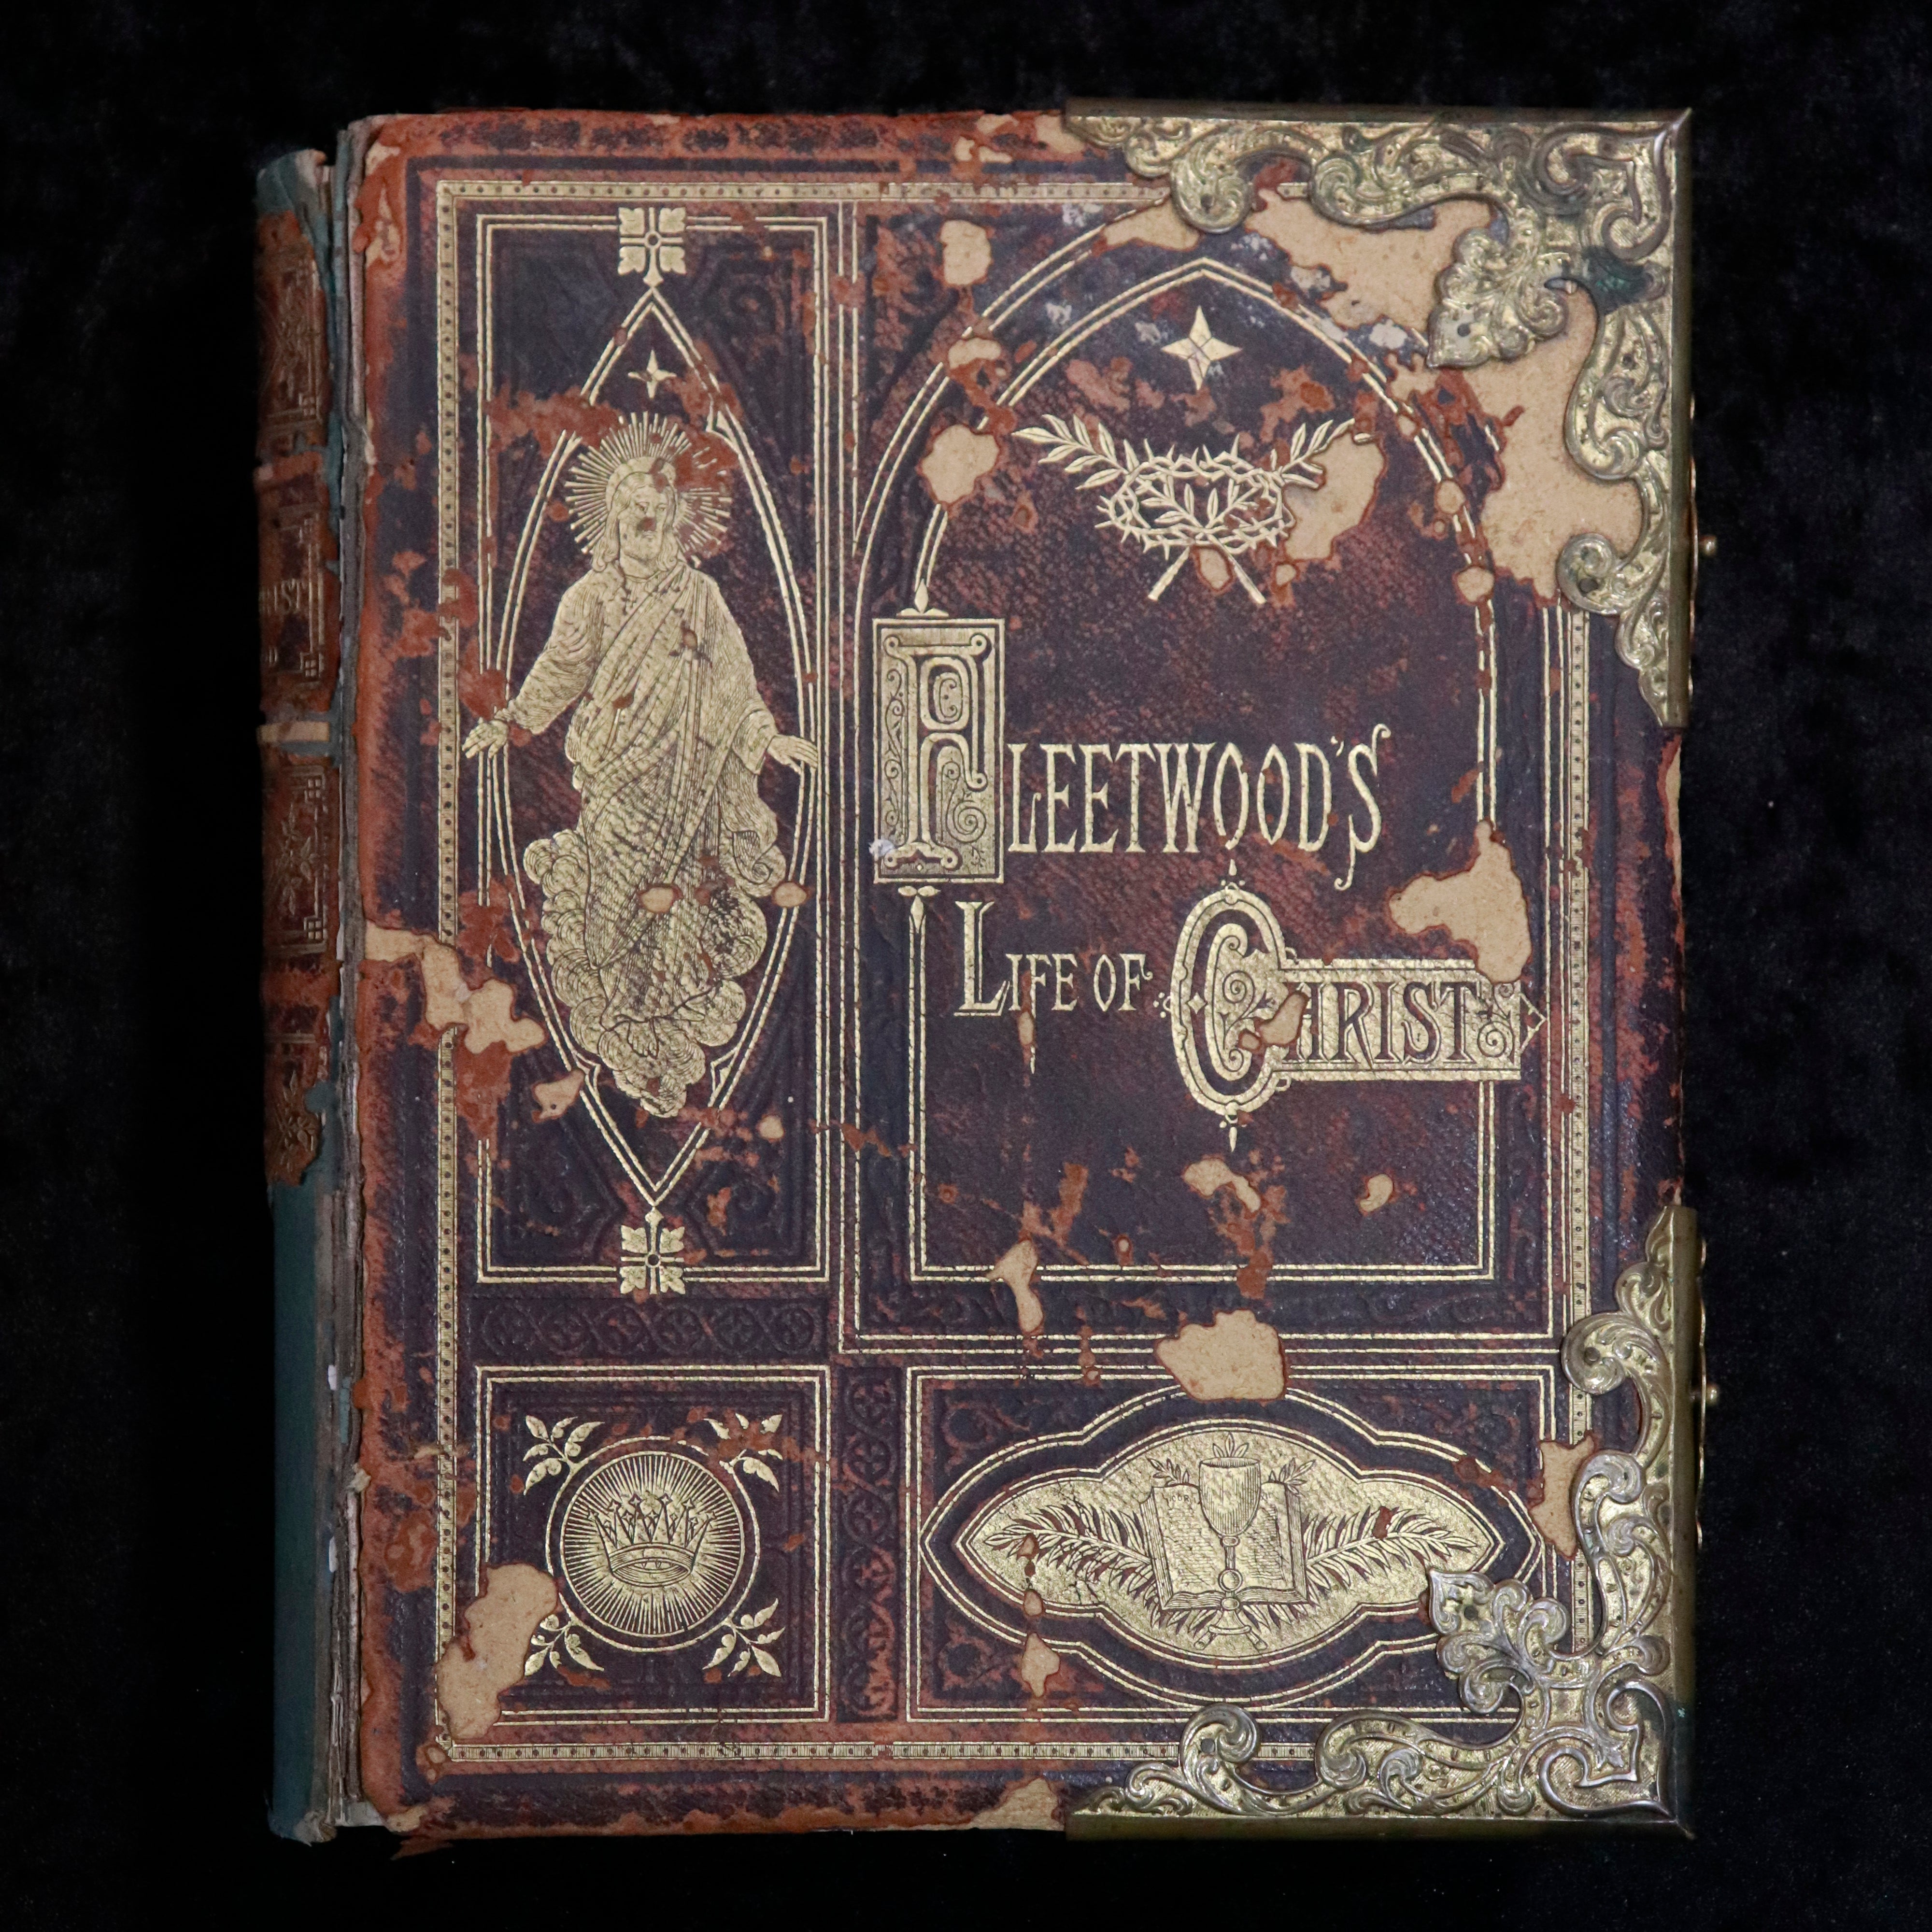 The Life Of Jesus Christ by Rev. John Fleetwood - c1880 - Antique Religious Book